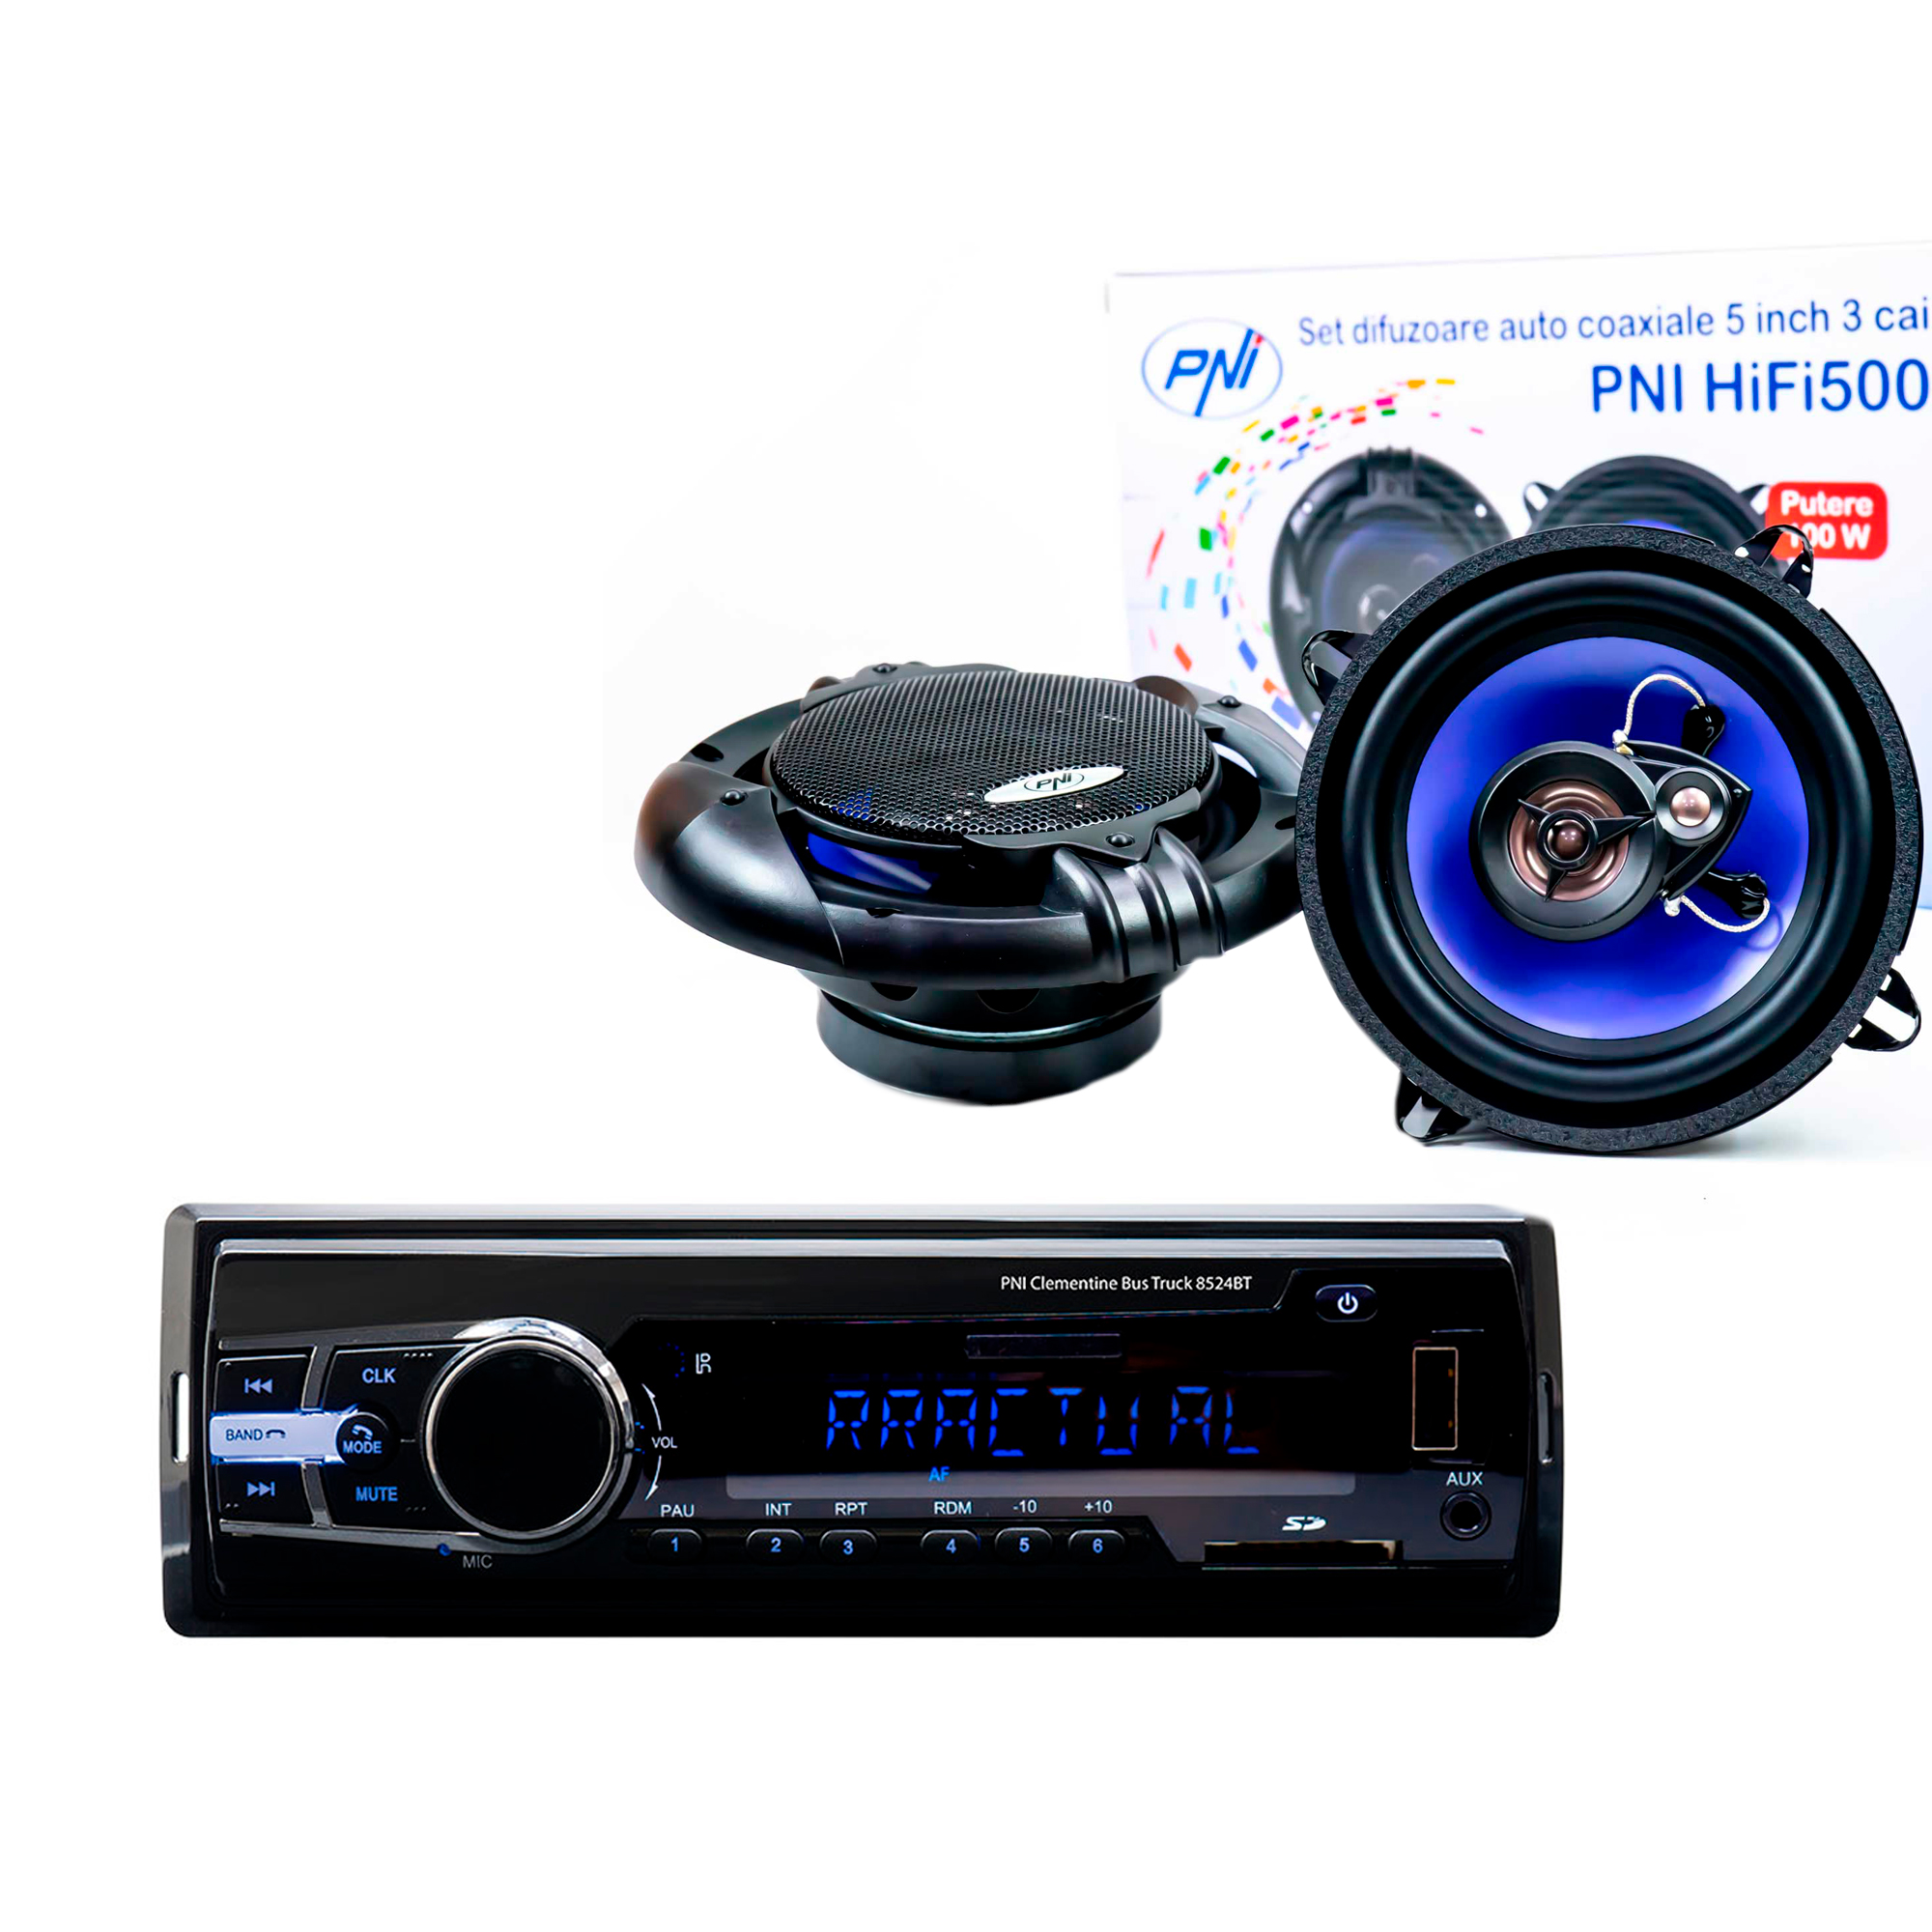 Pachet Radio MP3 player auto PNI Clementine 8524BT 4x45w + Difuzoare auto coaxiale PNI HiFi500, 100W, 12.7 cm image0